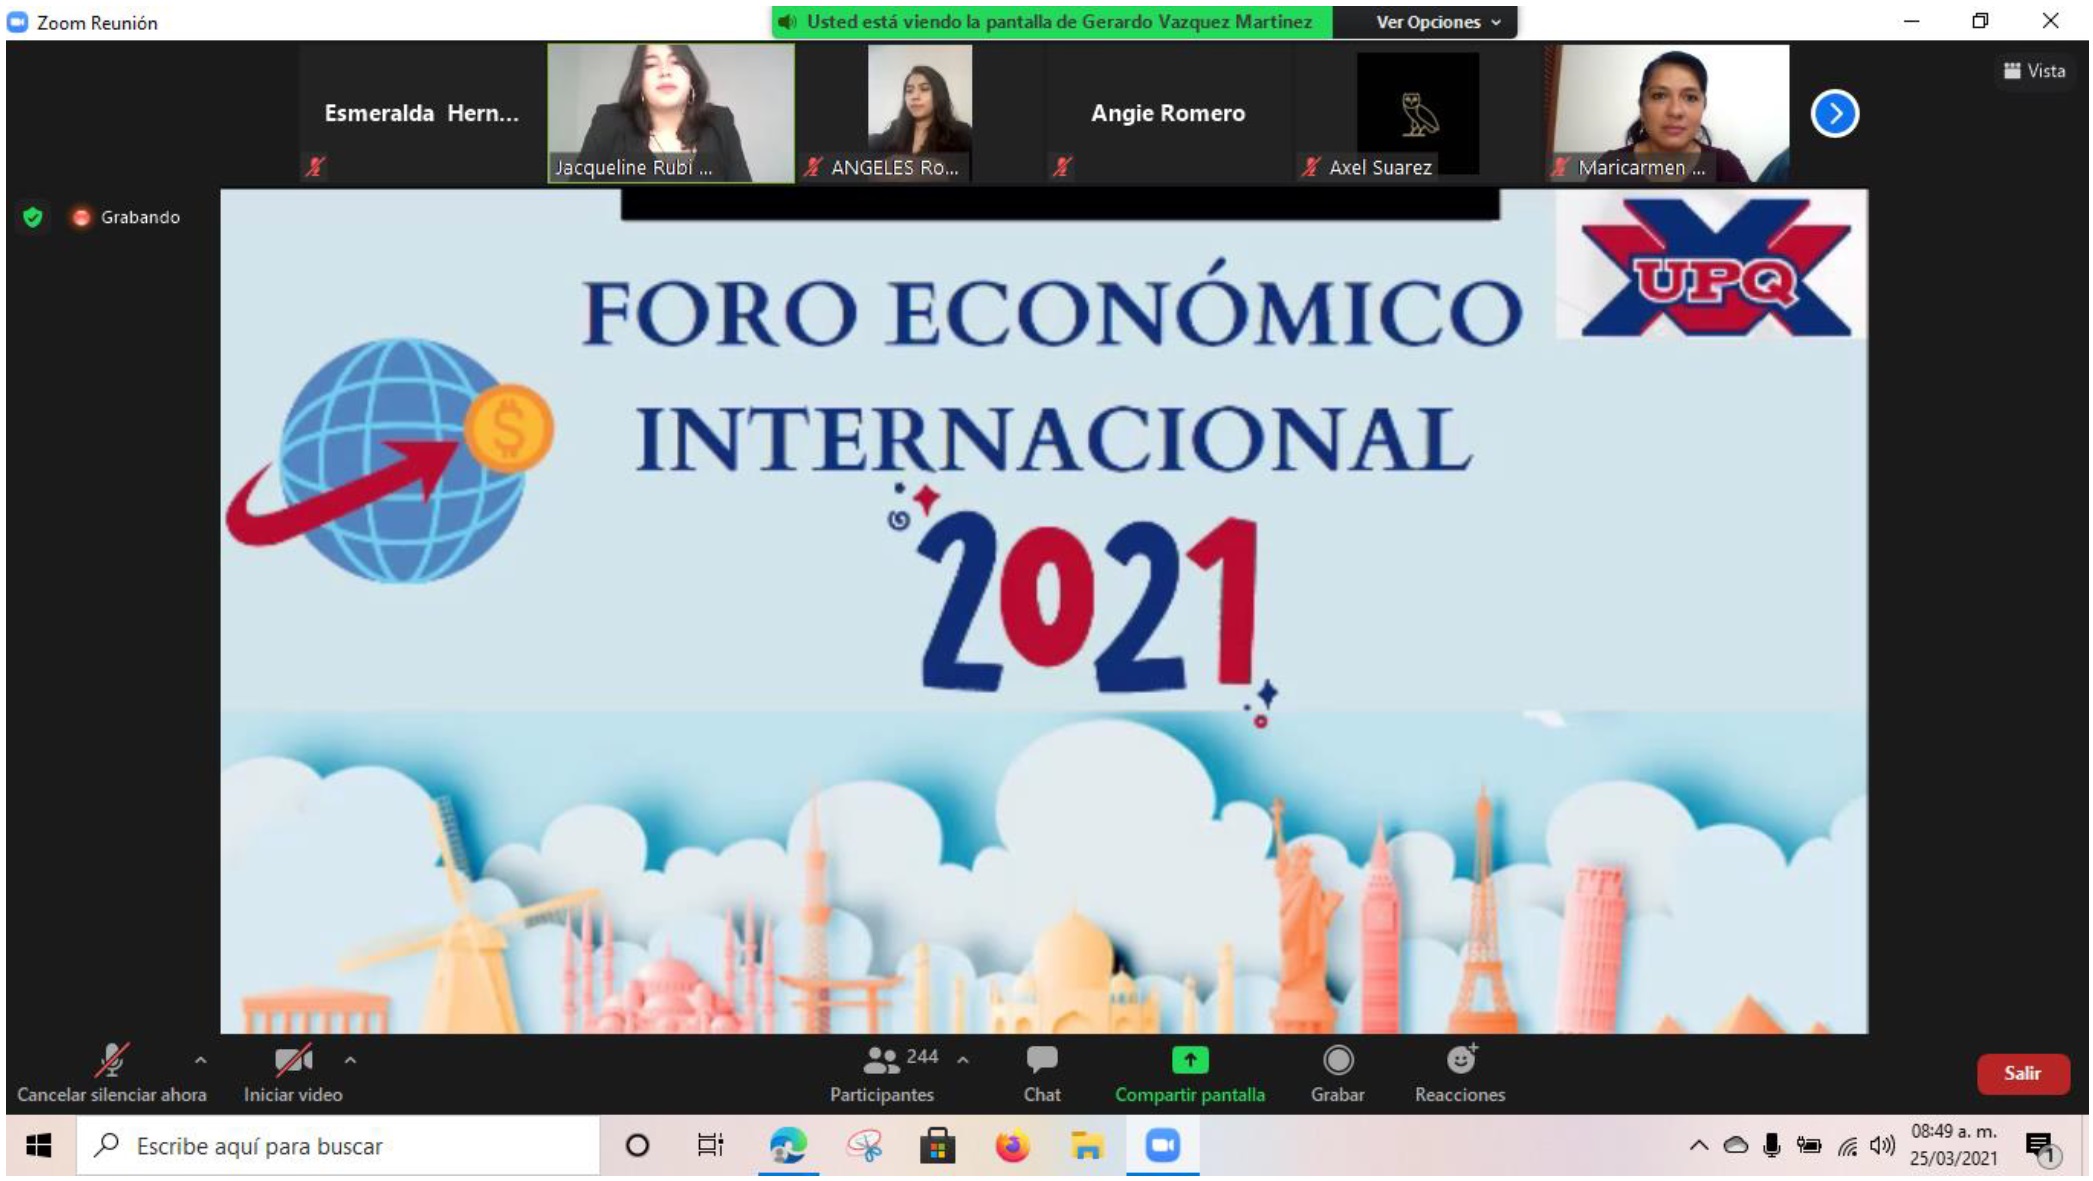 Foro Económico Internacional 2021